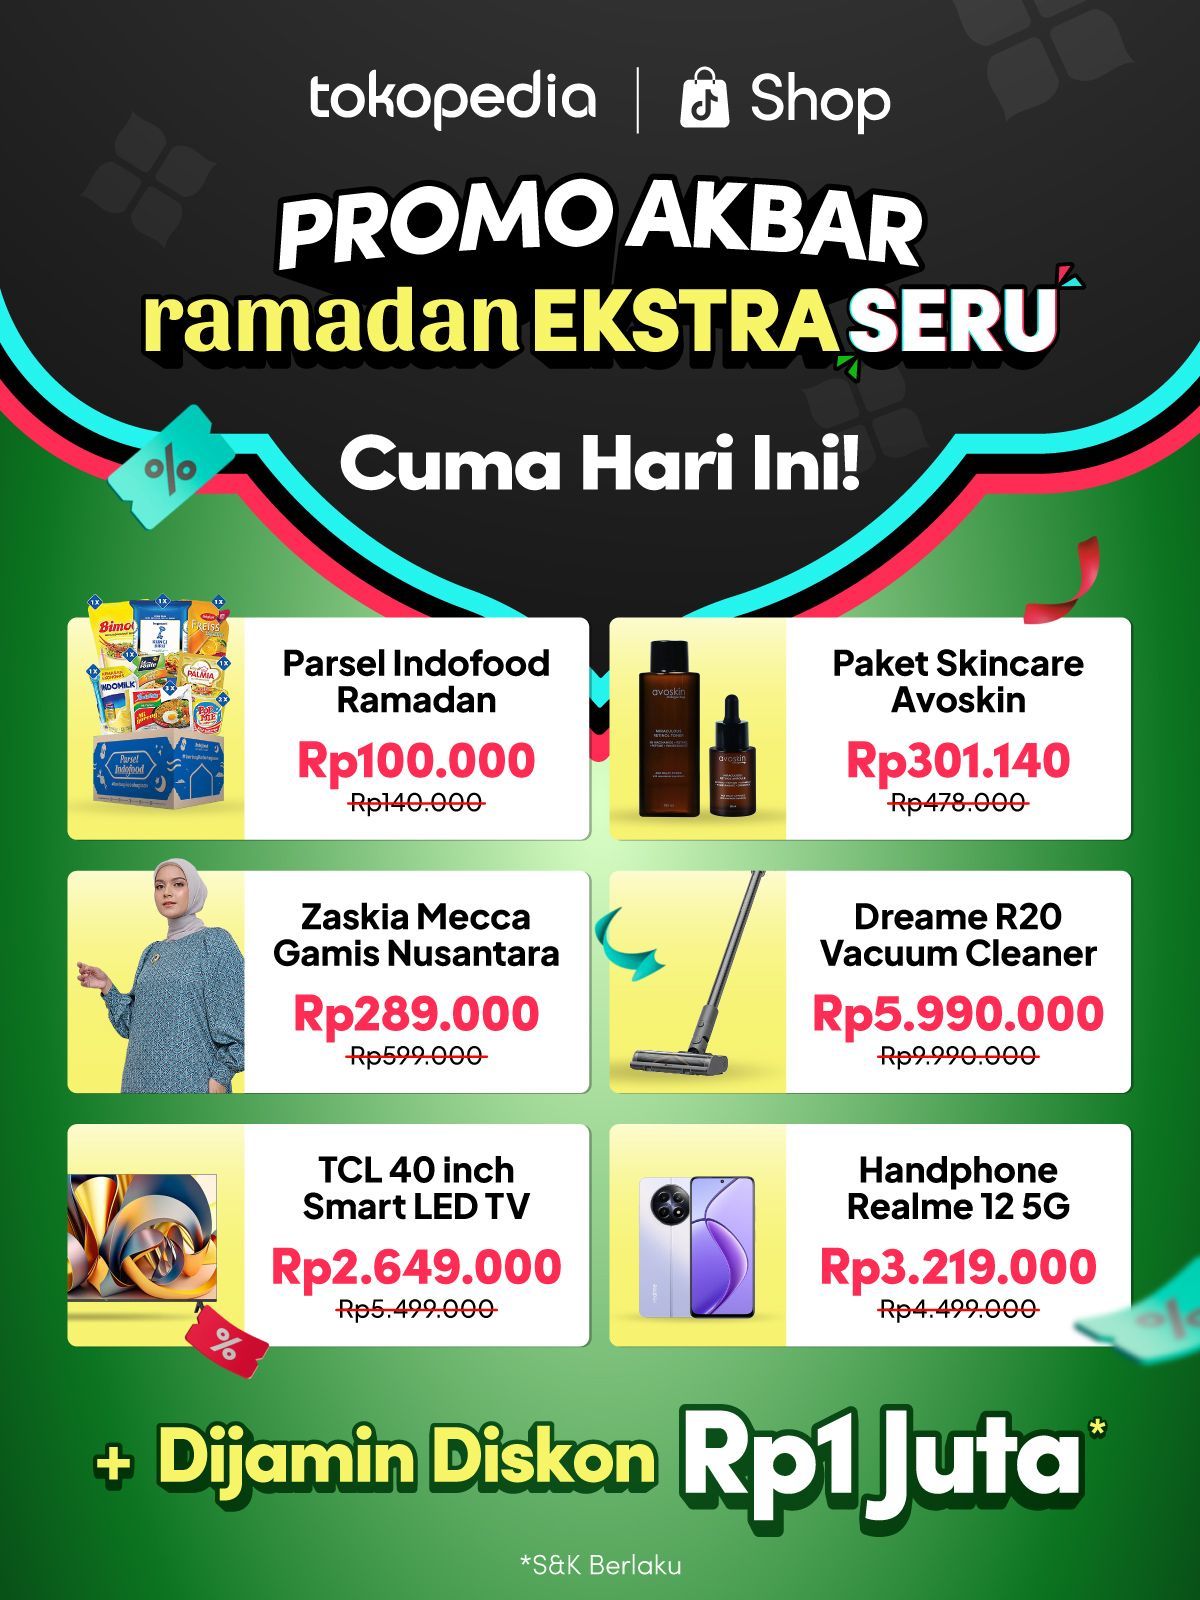 Daftar Harga Promo Akbar Ramadan Ekstra Seru di Tokopedia